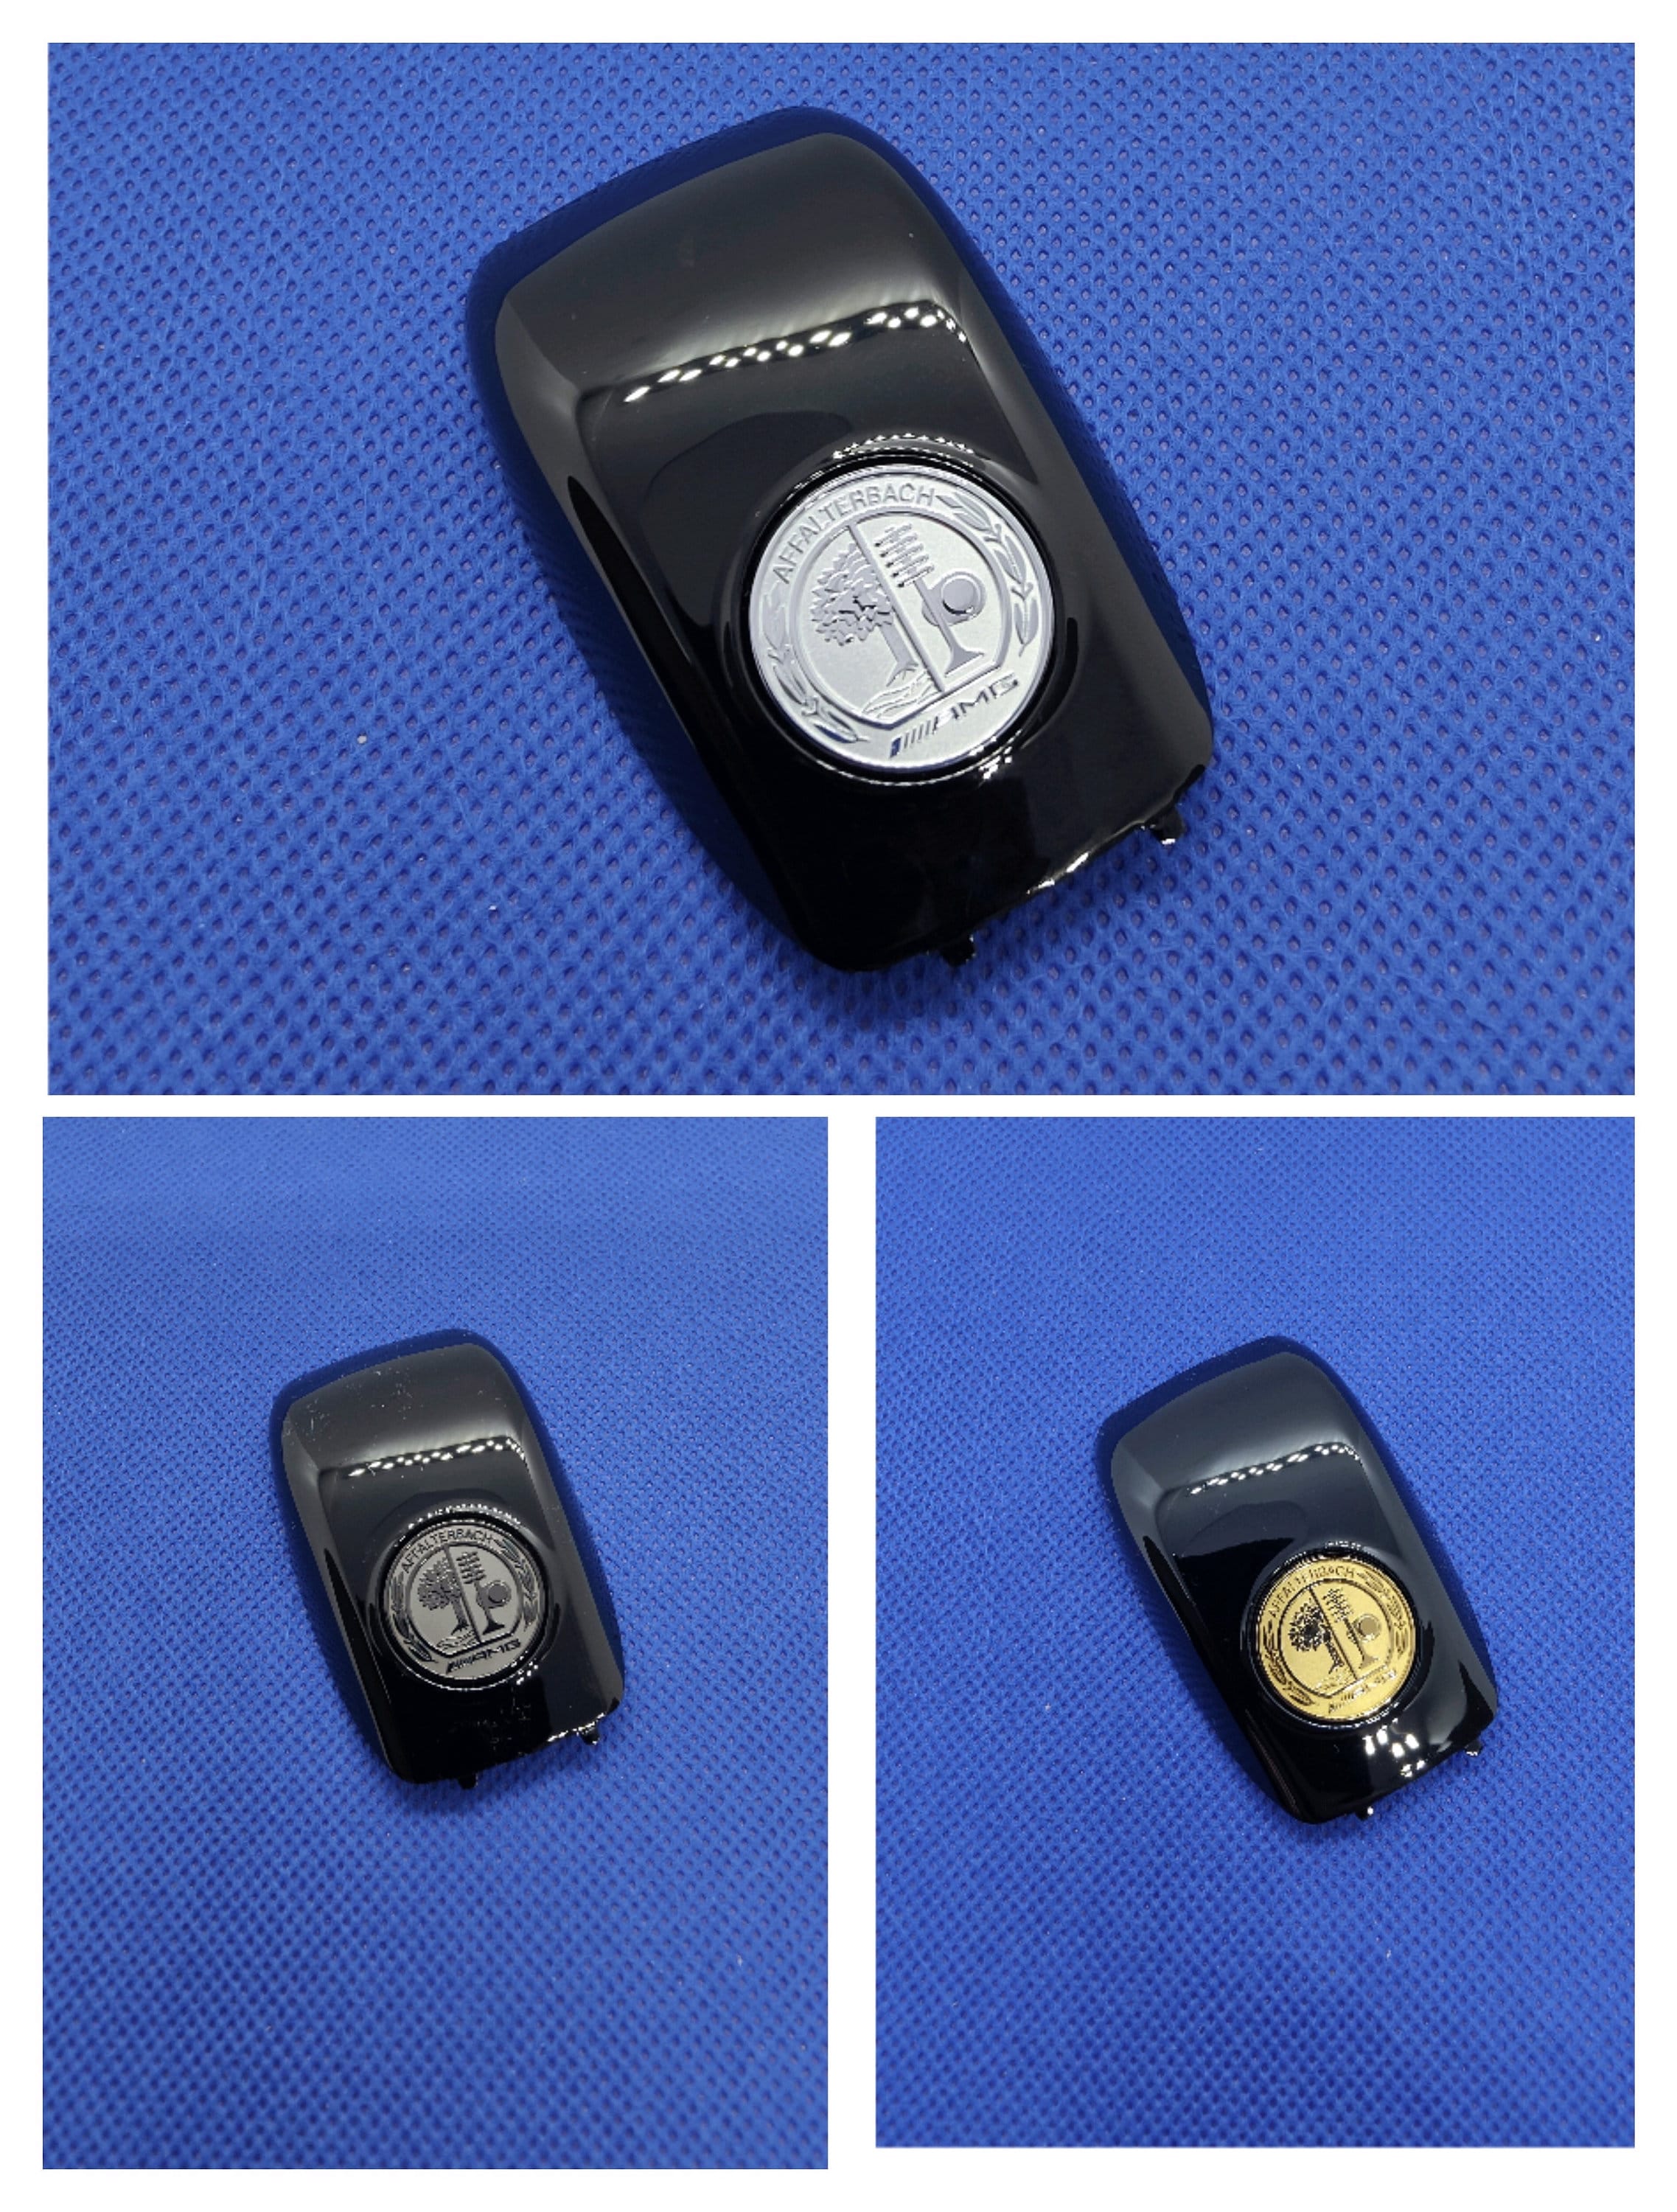 Mercedes key case - .de